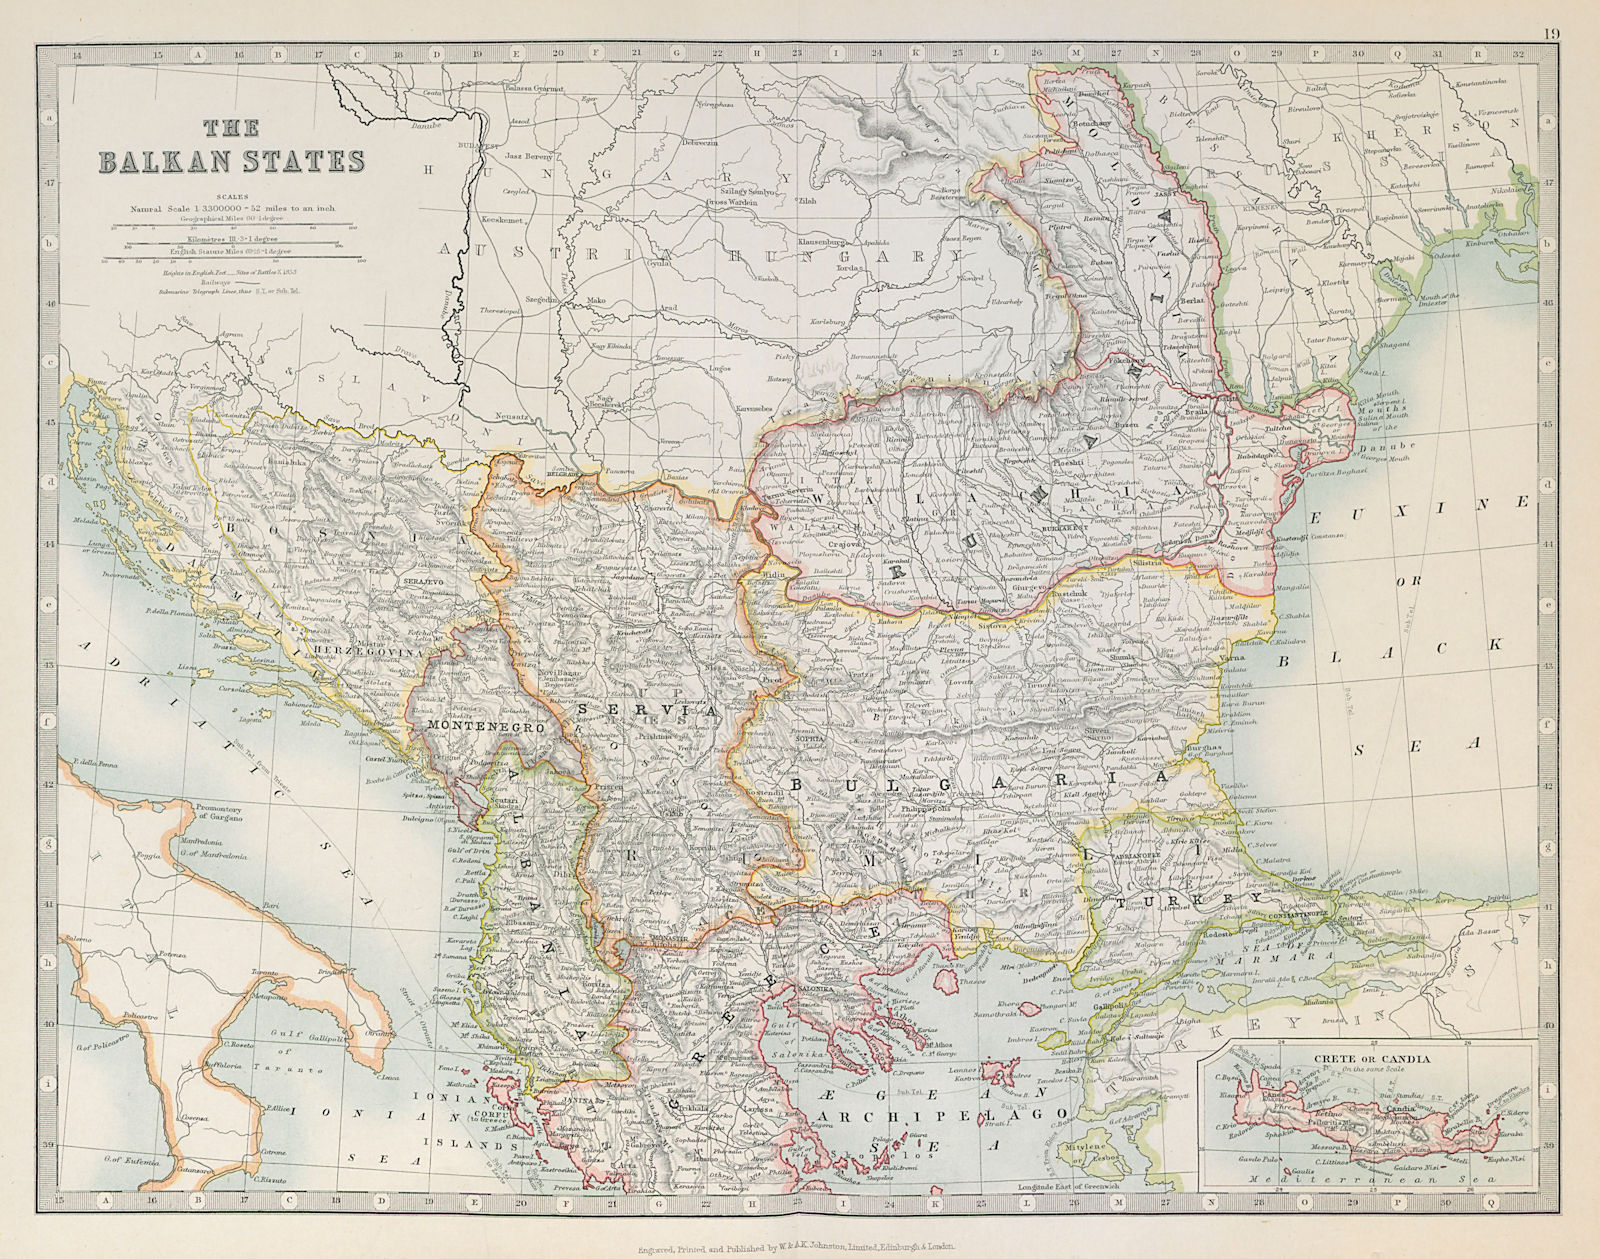 BALKAN STATES. Key battlefields & dates. Bulgaria Wallachia. JOHNSTON 1915 map